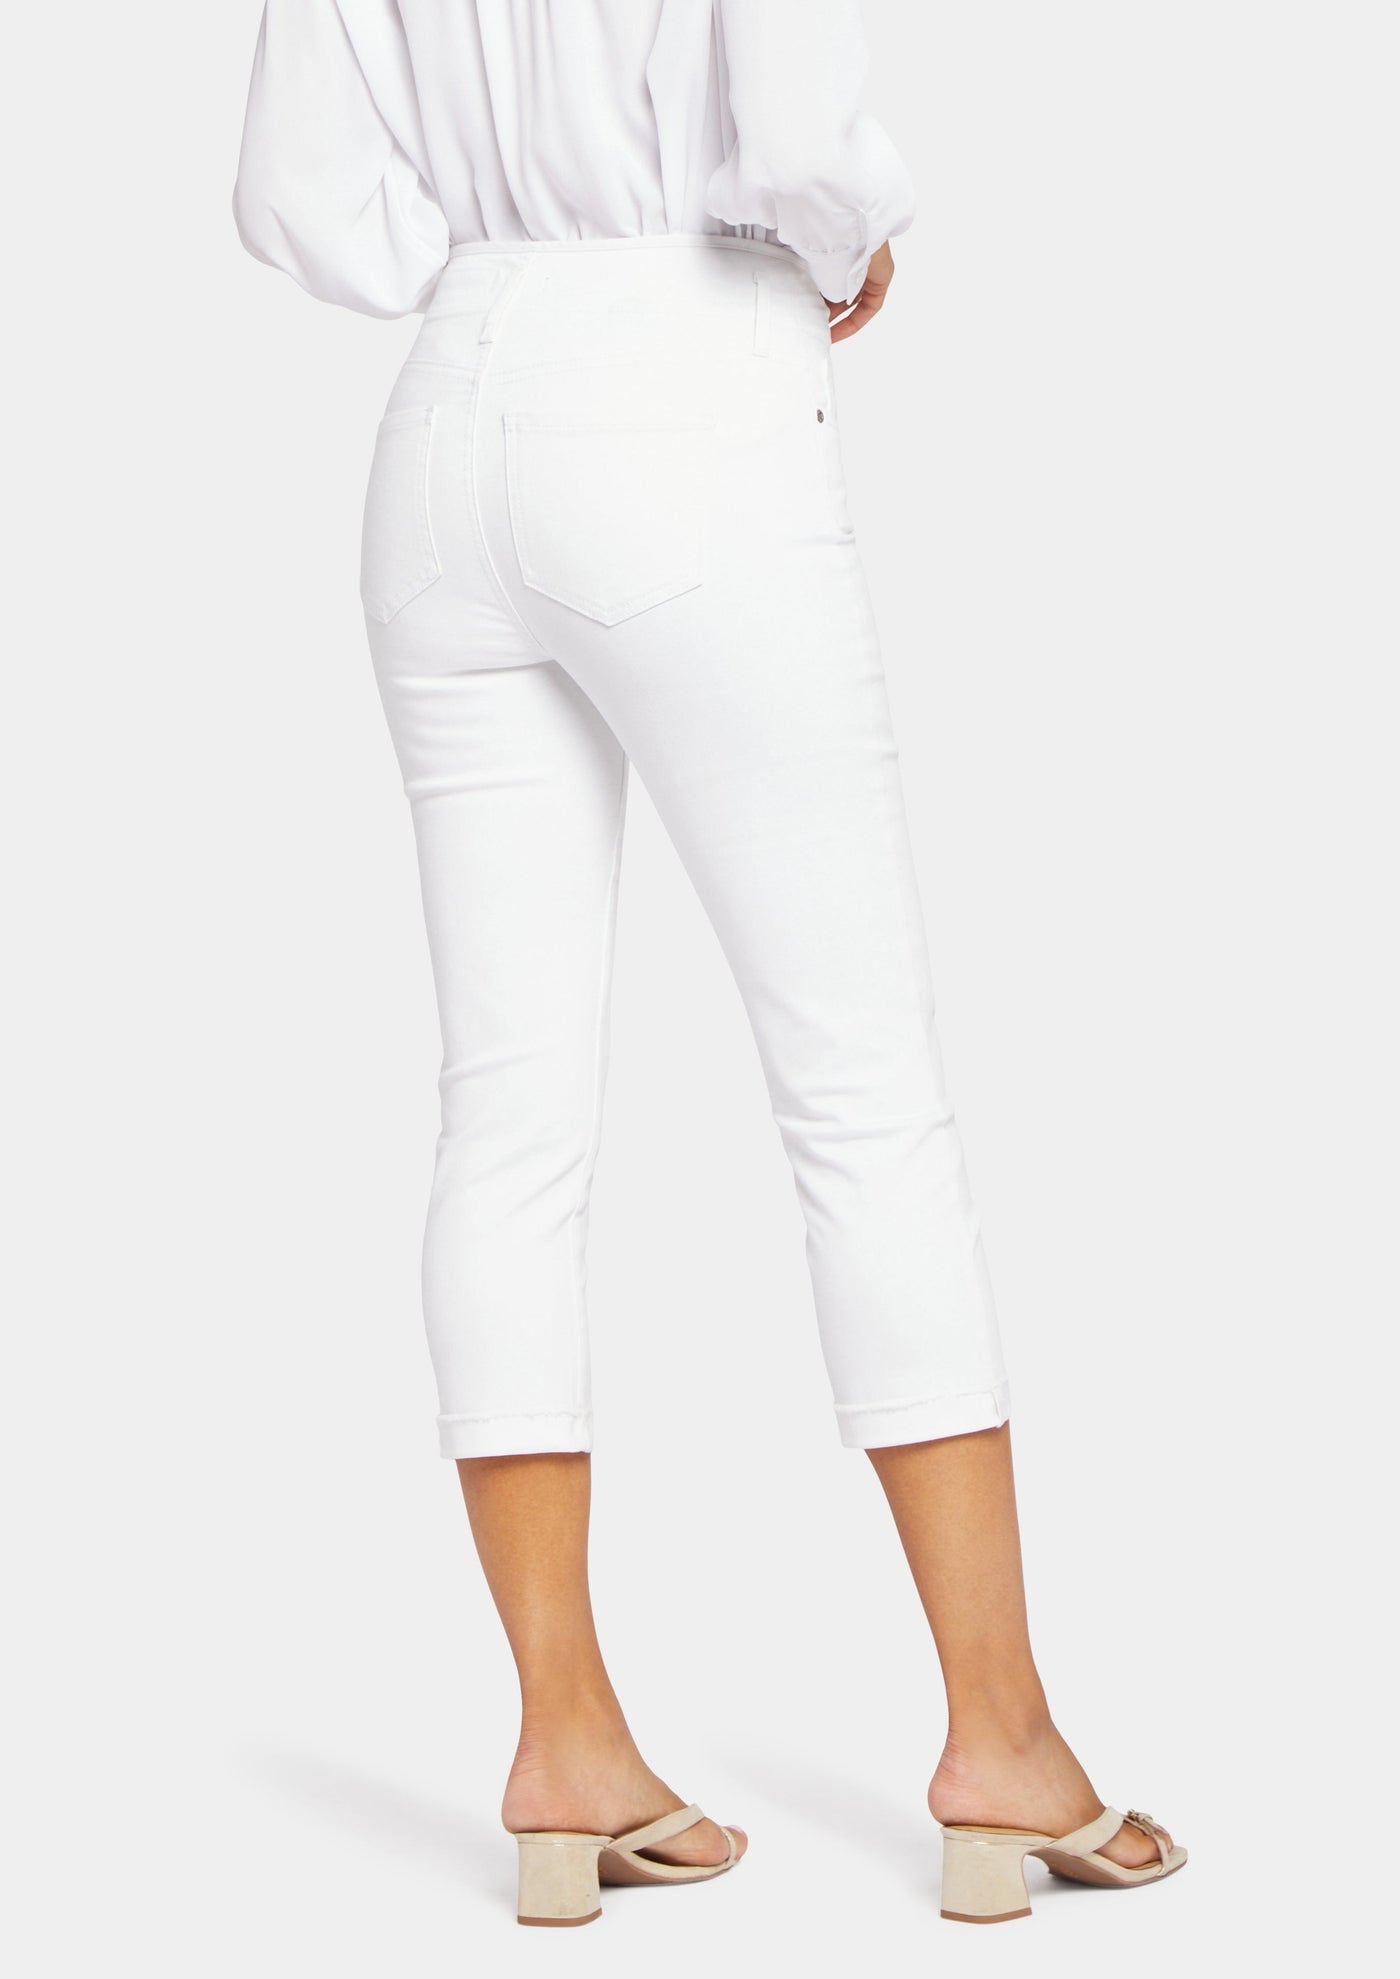 NYDJ - Chloe Capri Jeans With Cuffs - White